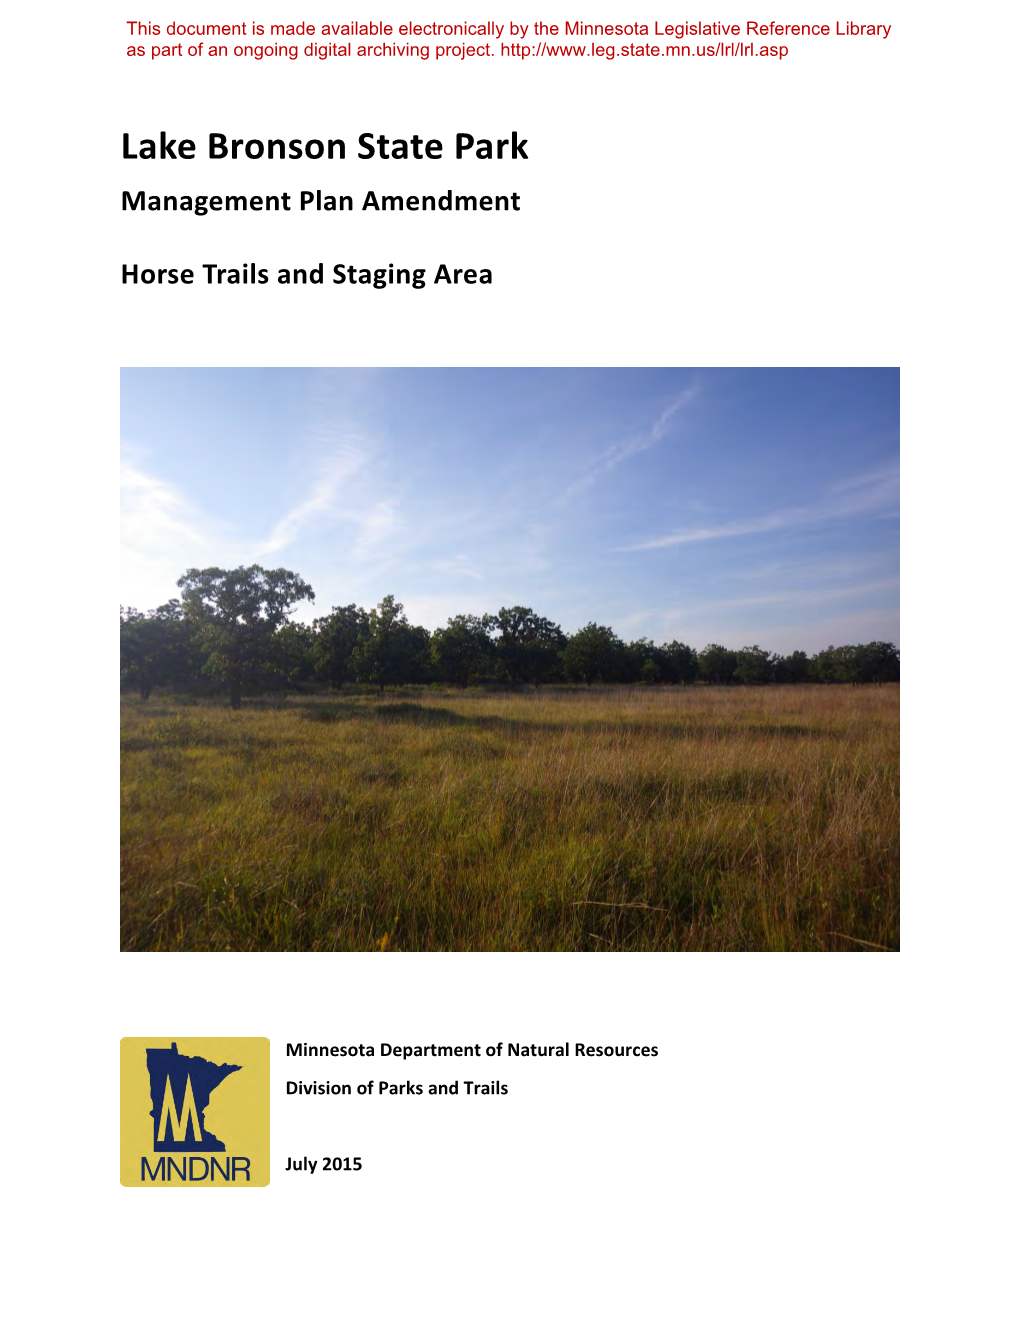 Lake Bronson State Park Management Plan Amendment